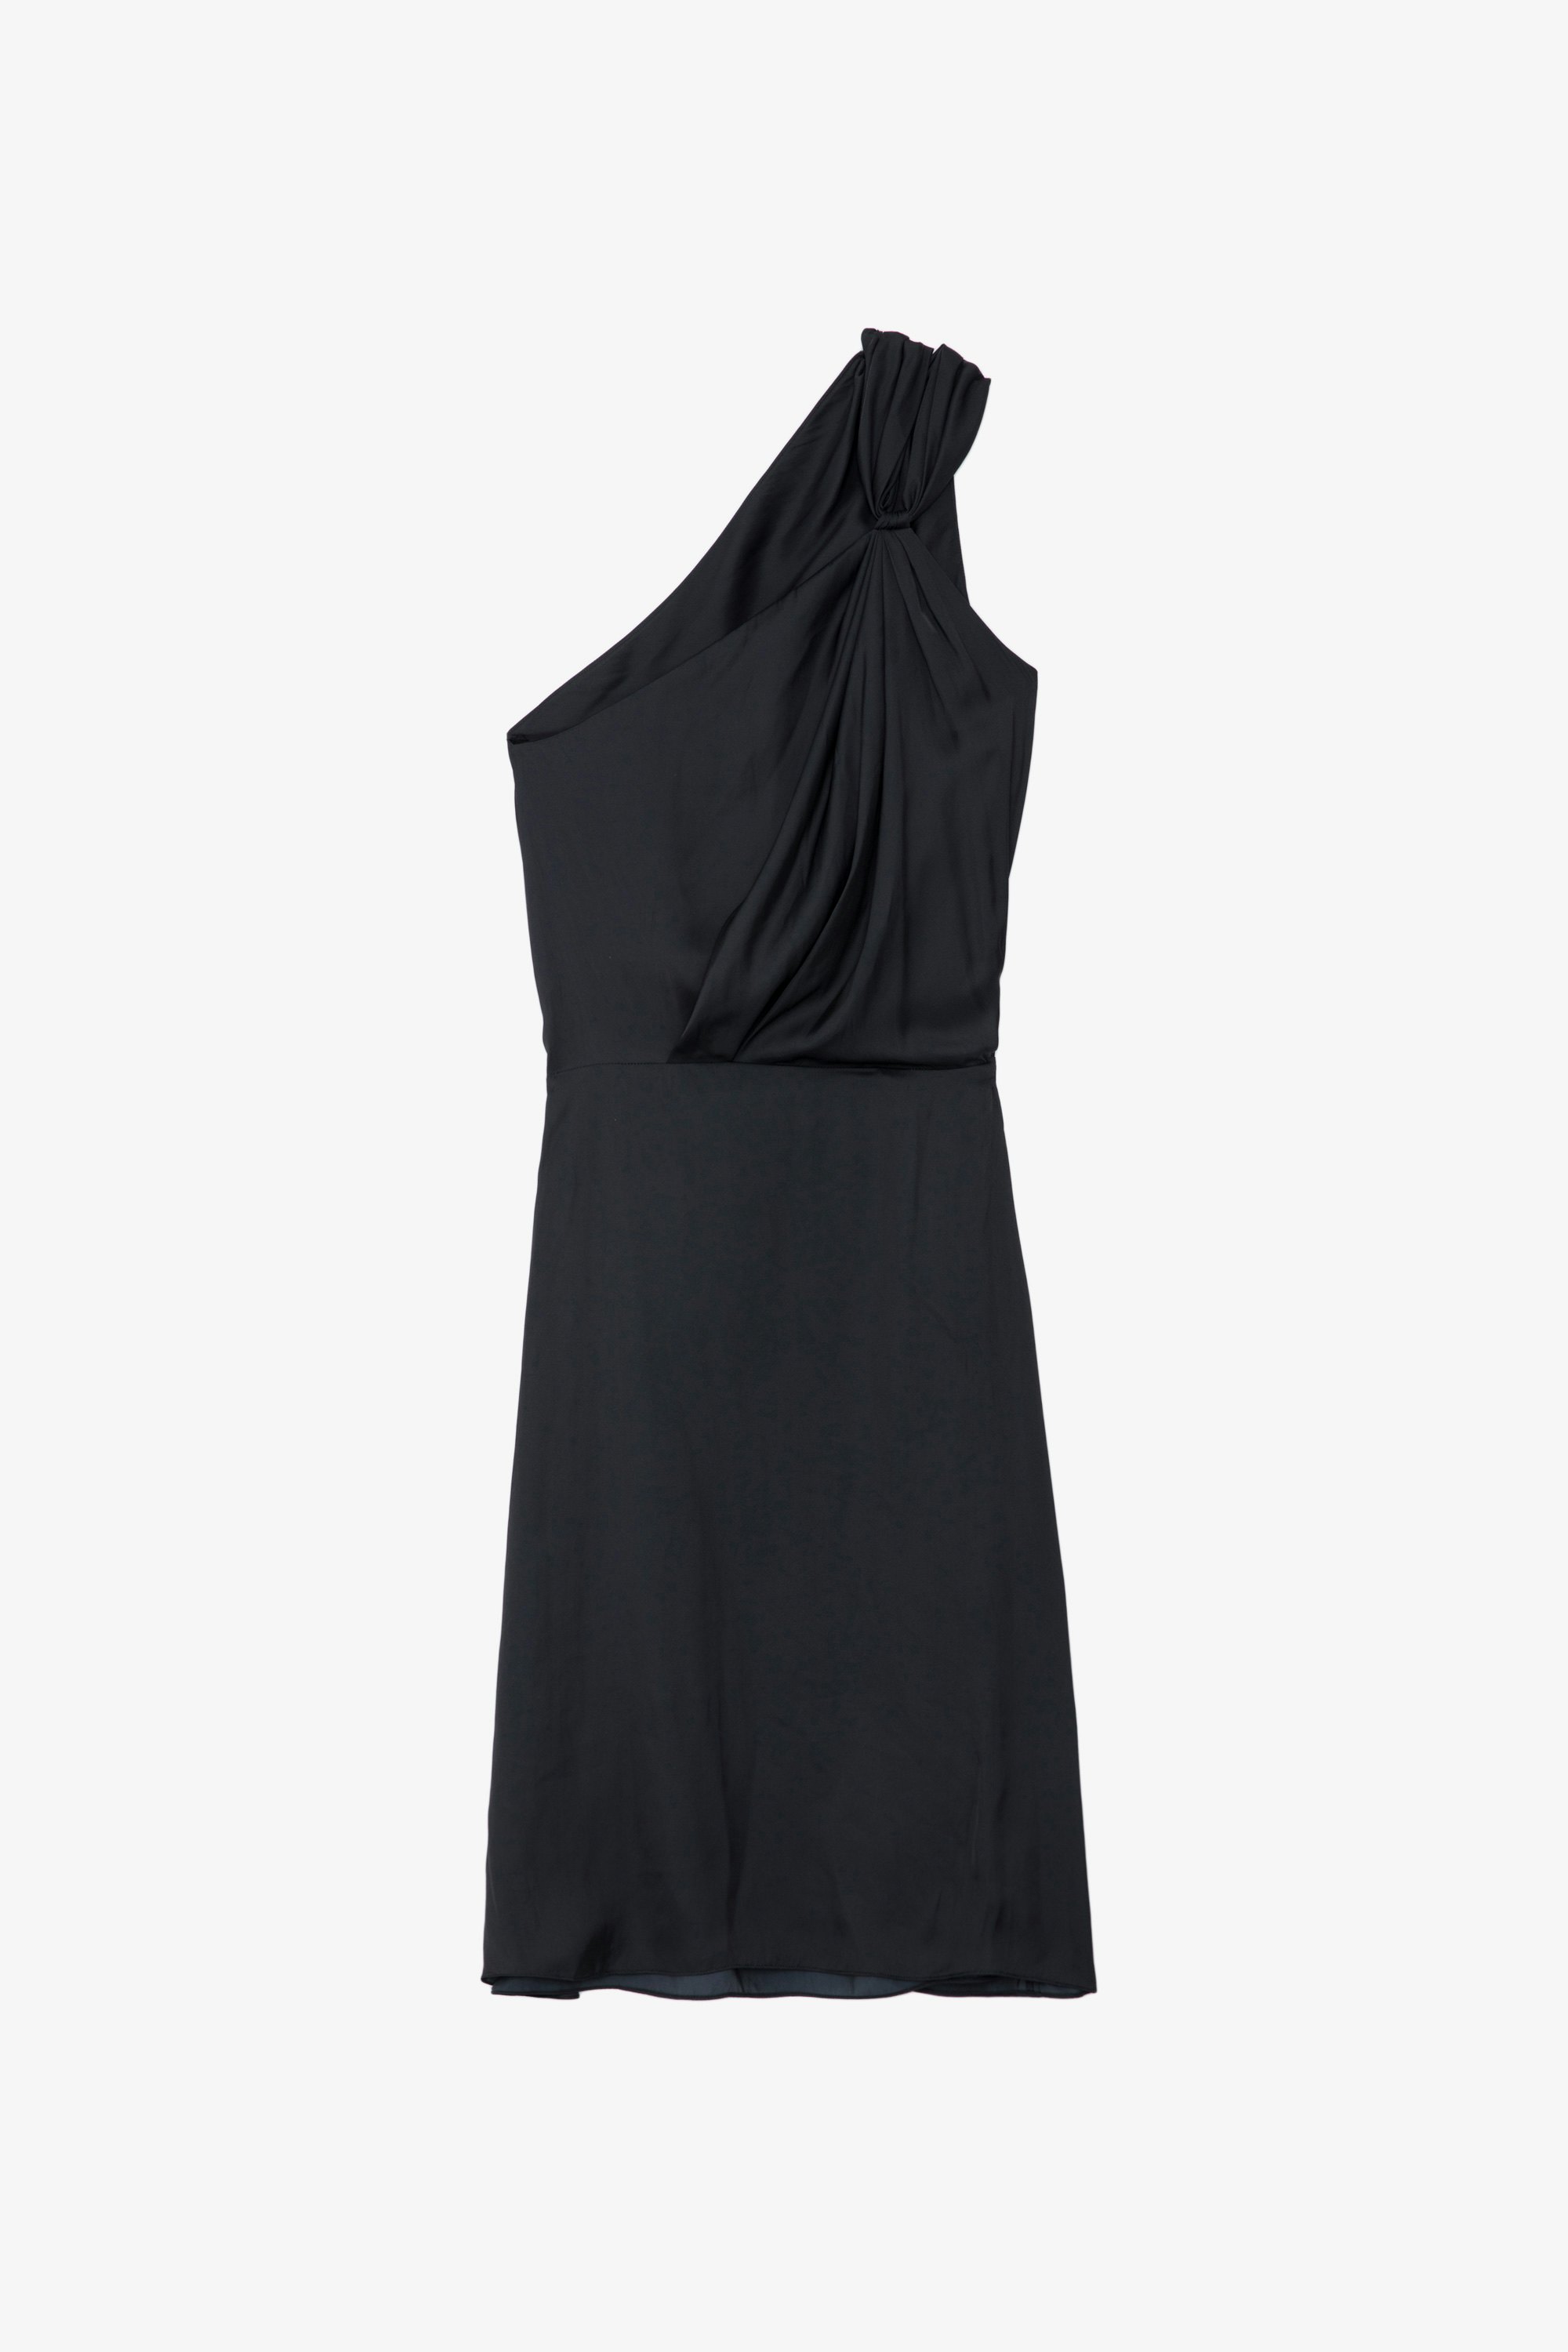 Razal Satin Dress - Women's black satin midi dress with draped asymmetric strap.